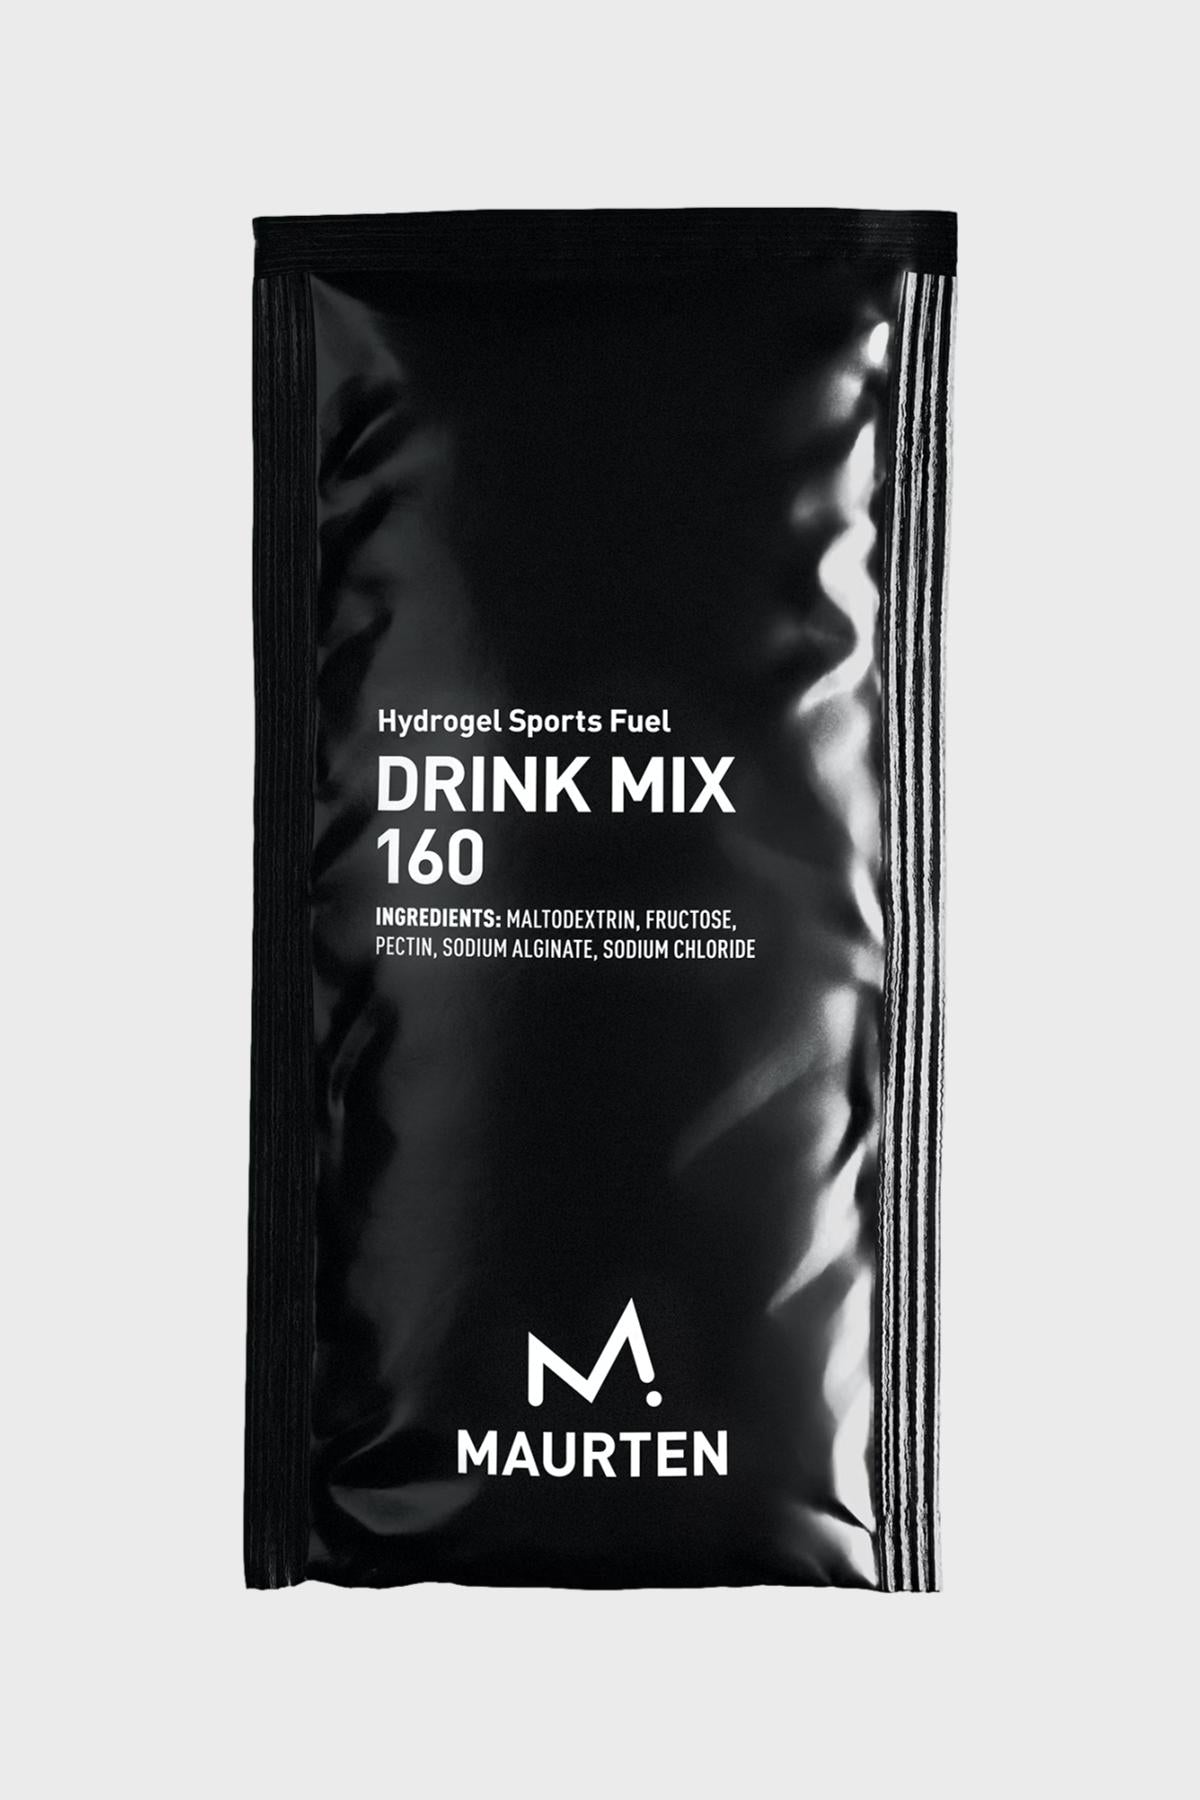 Maurten - DRINK MIX 160 - UNIT